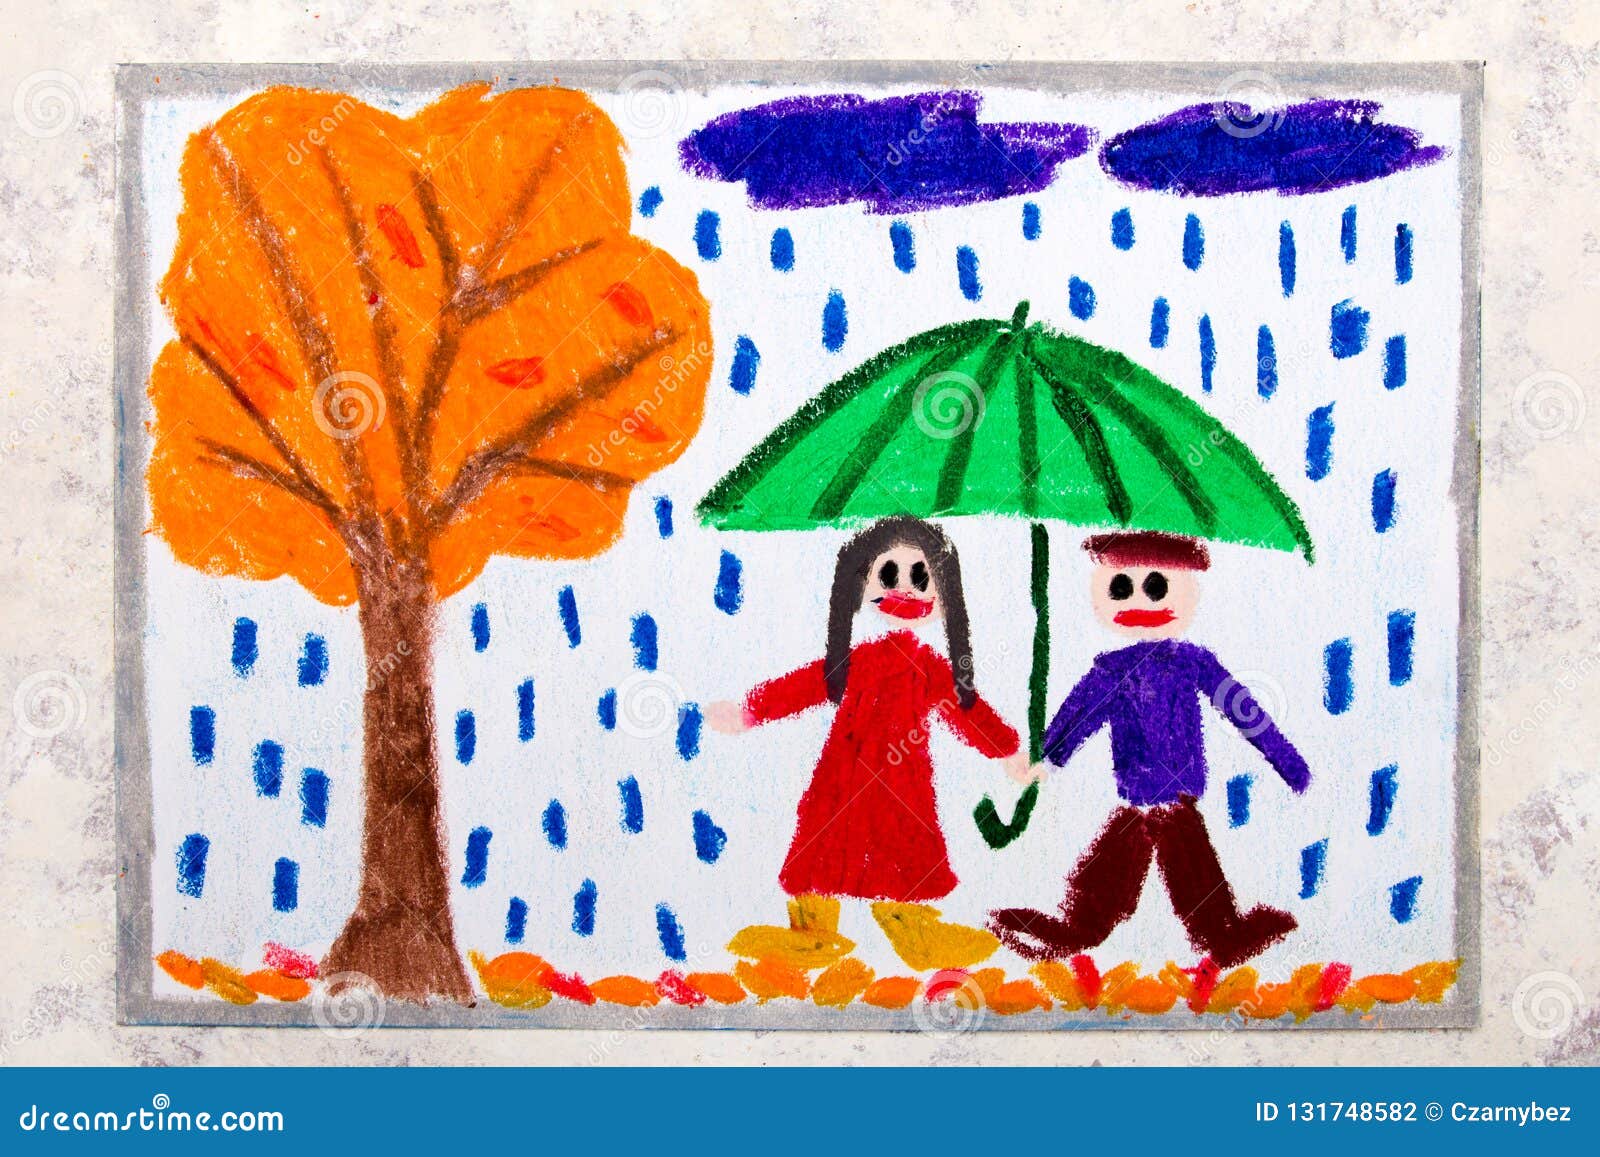 Rainy day scenery drawing — Steemit-saigonsouth.com.vn